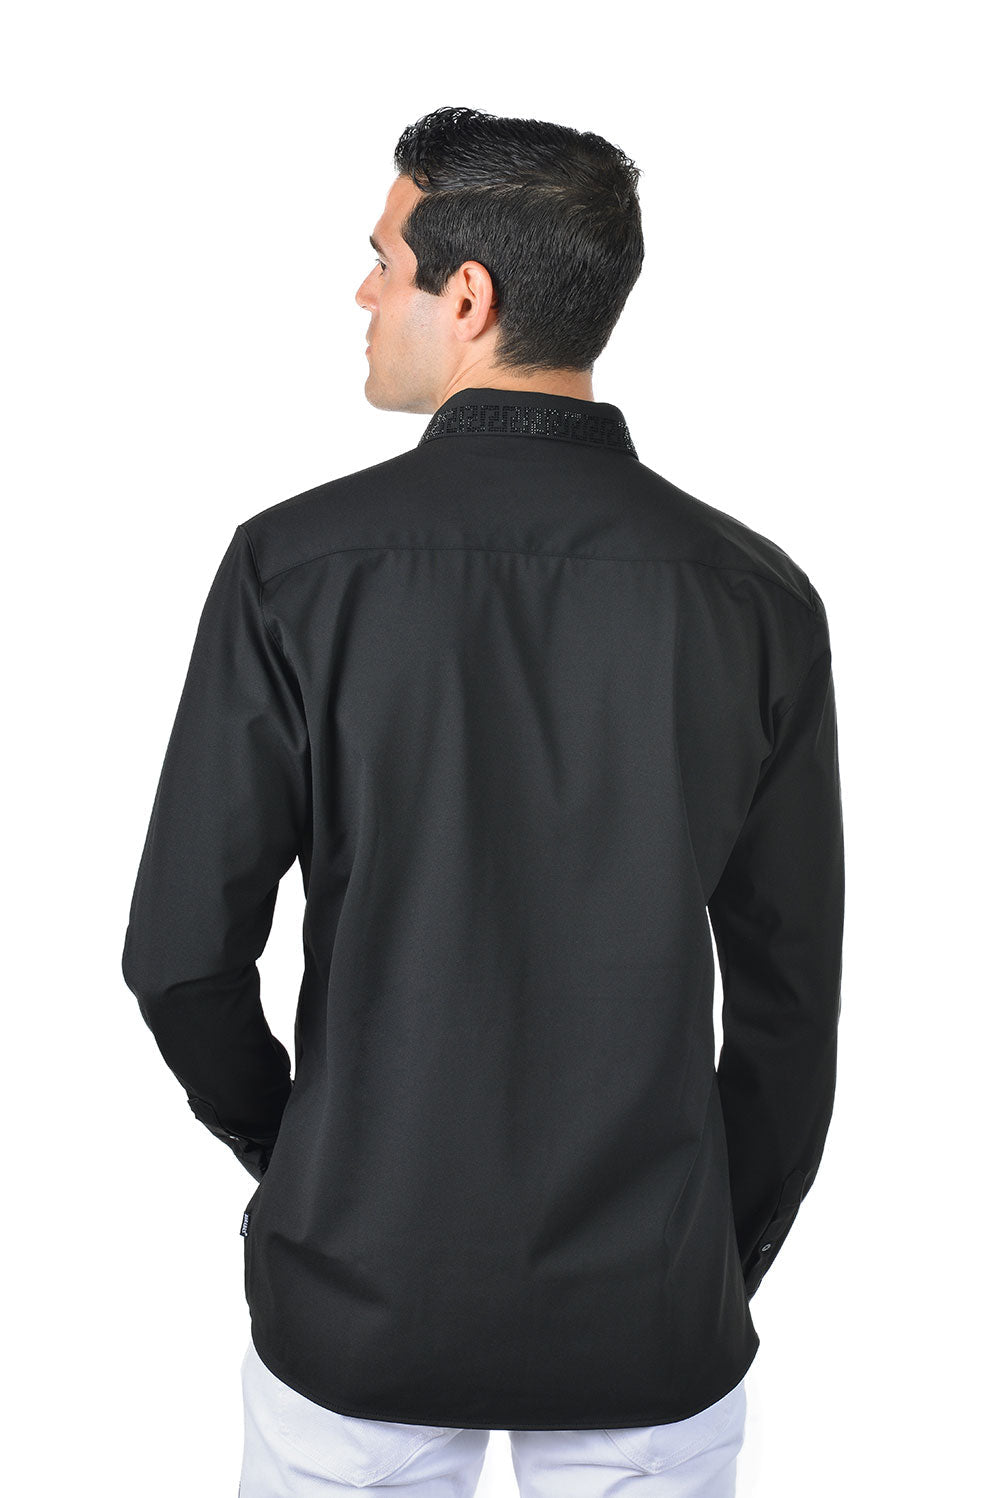 Barabas Men's Greek Key Baroque Button Down Long Sleeves Shirts BR100 Black